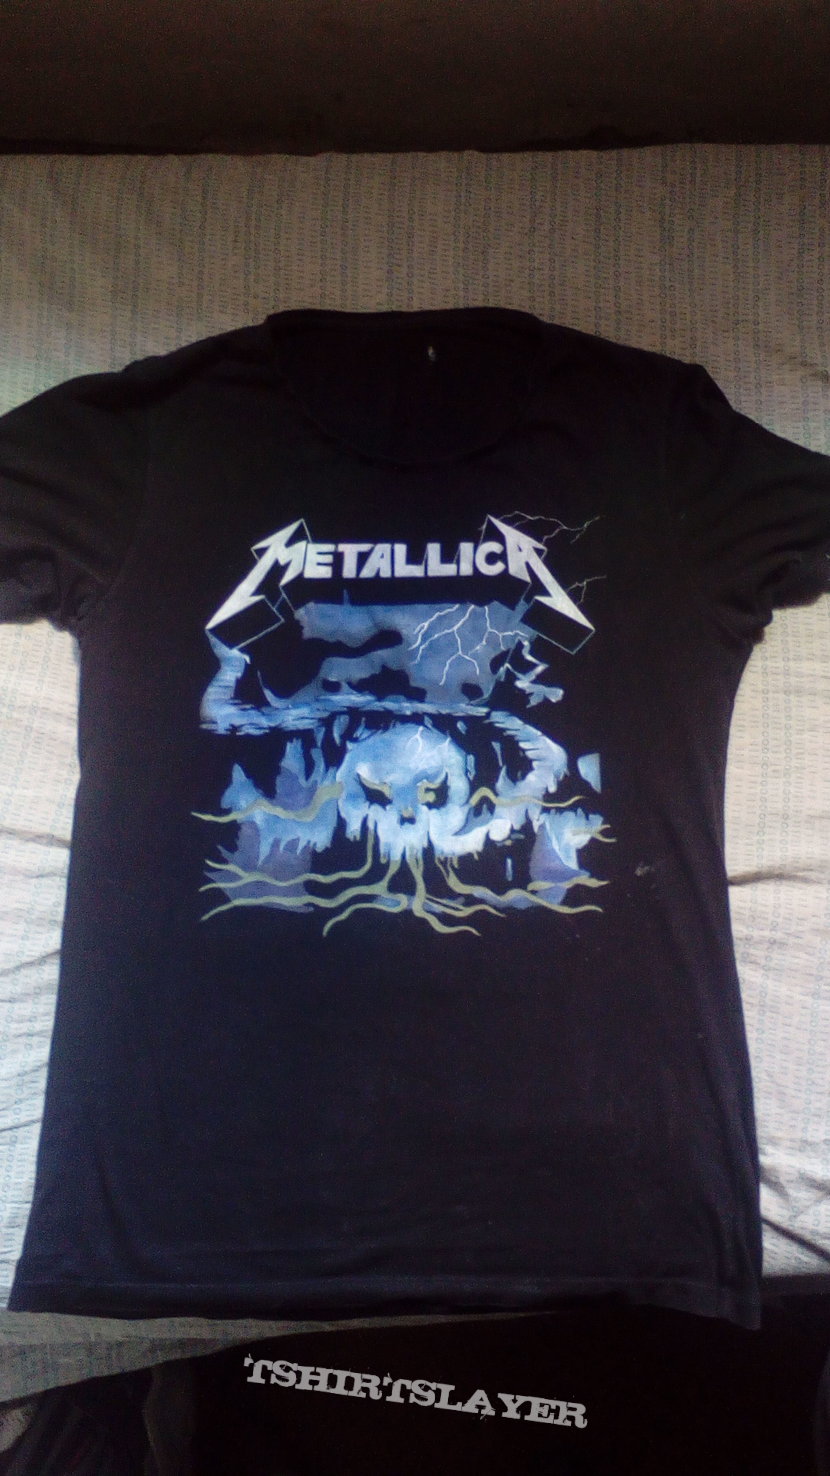 Metallica Creeping Death